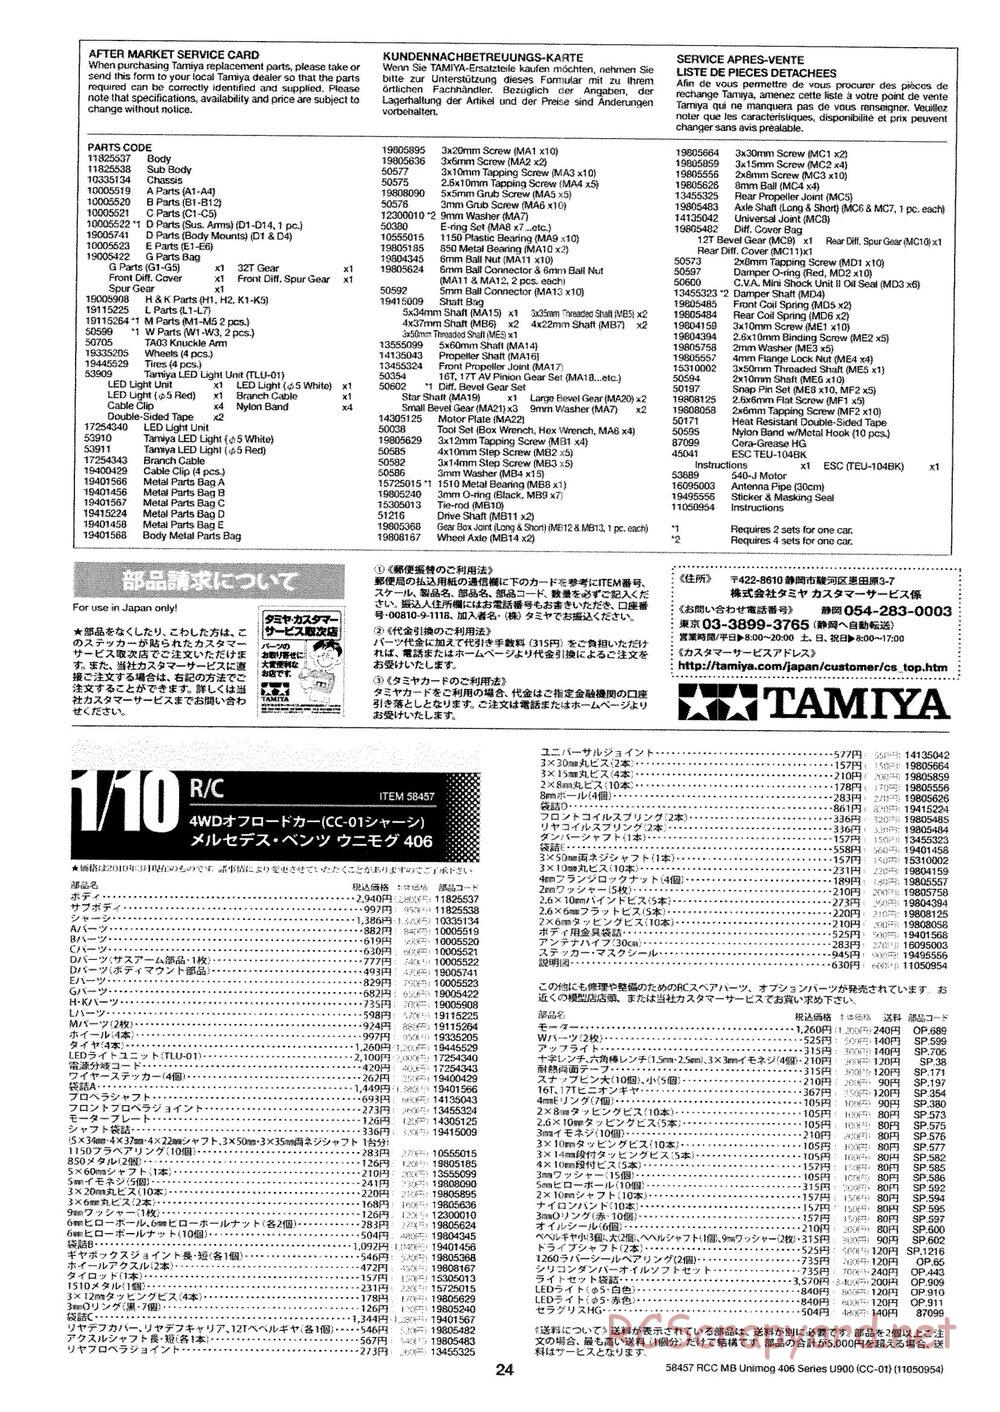 Tamiya - Mercedes-Benz Unimog 406 Series U900 - CC-01 Chassis - Manual - Page 24